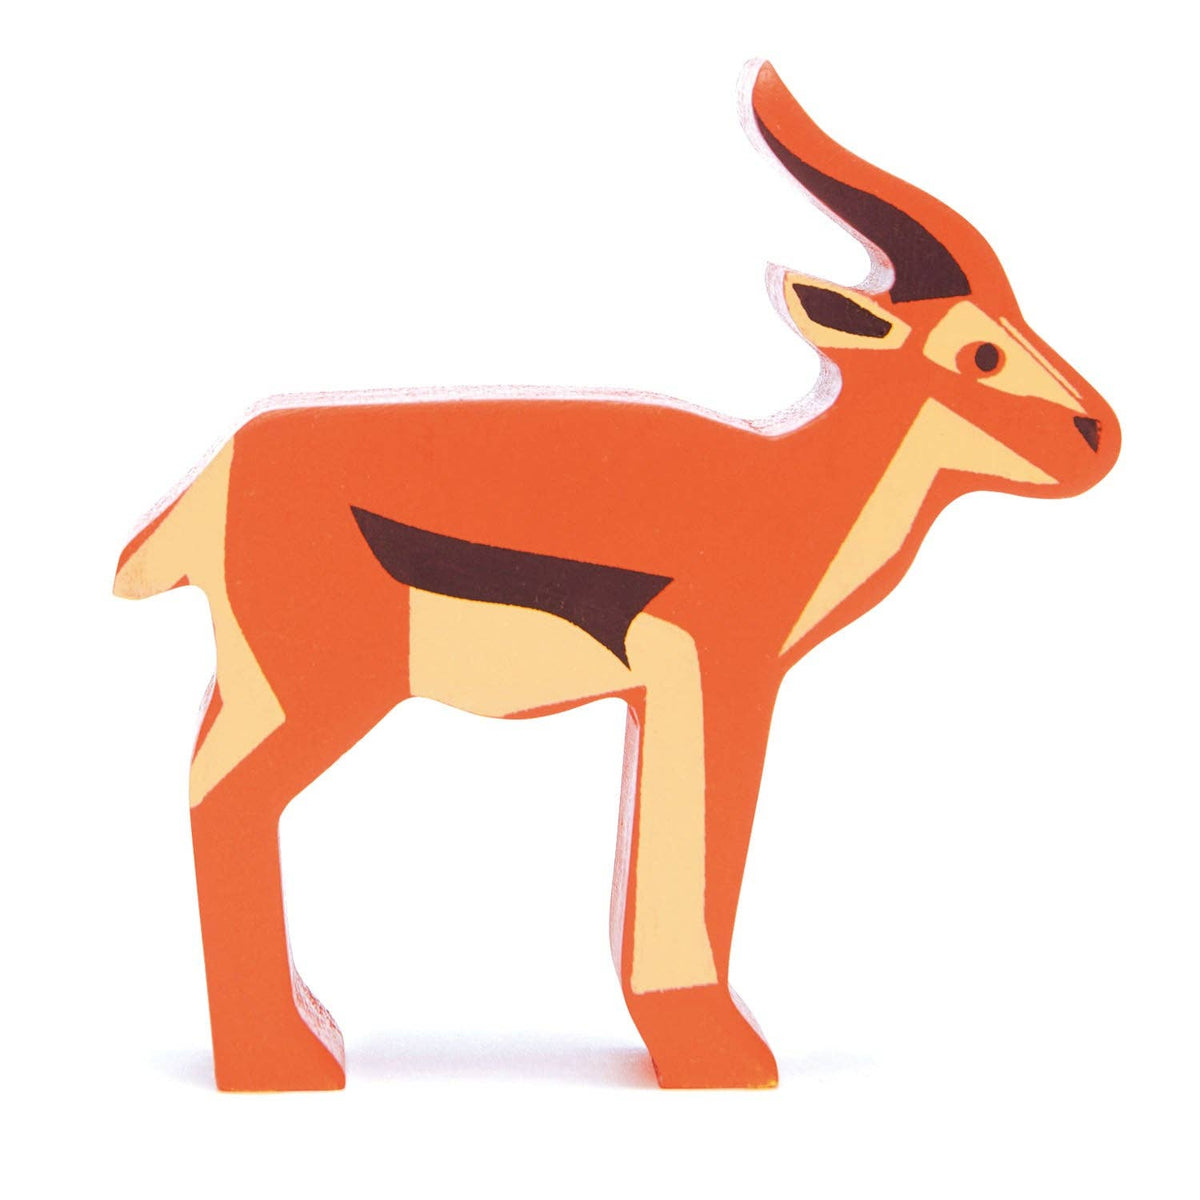 ThreadBear Design UK/EU Tender Leaf Toys - Wooden Safari Antelope Toy for Kids